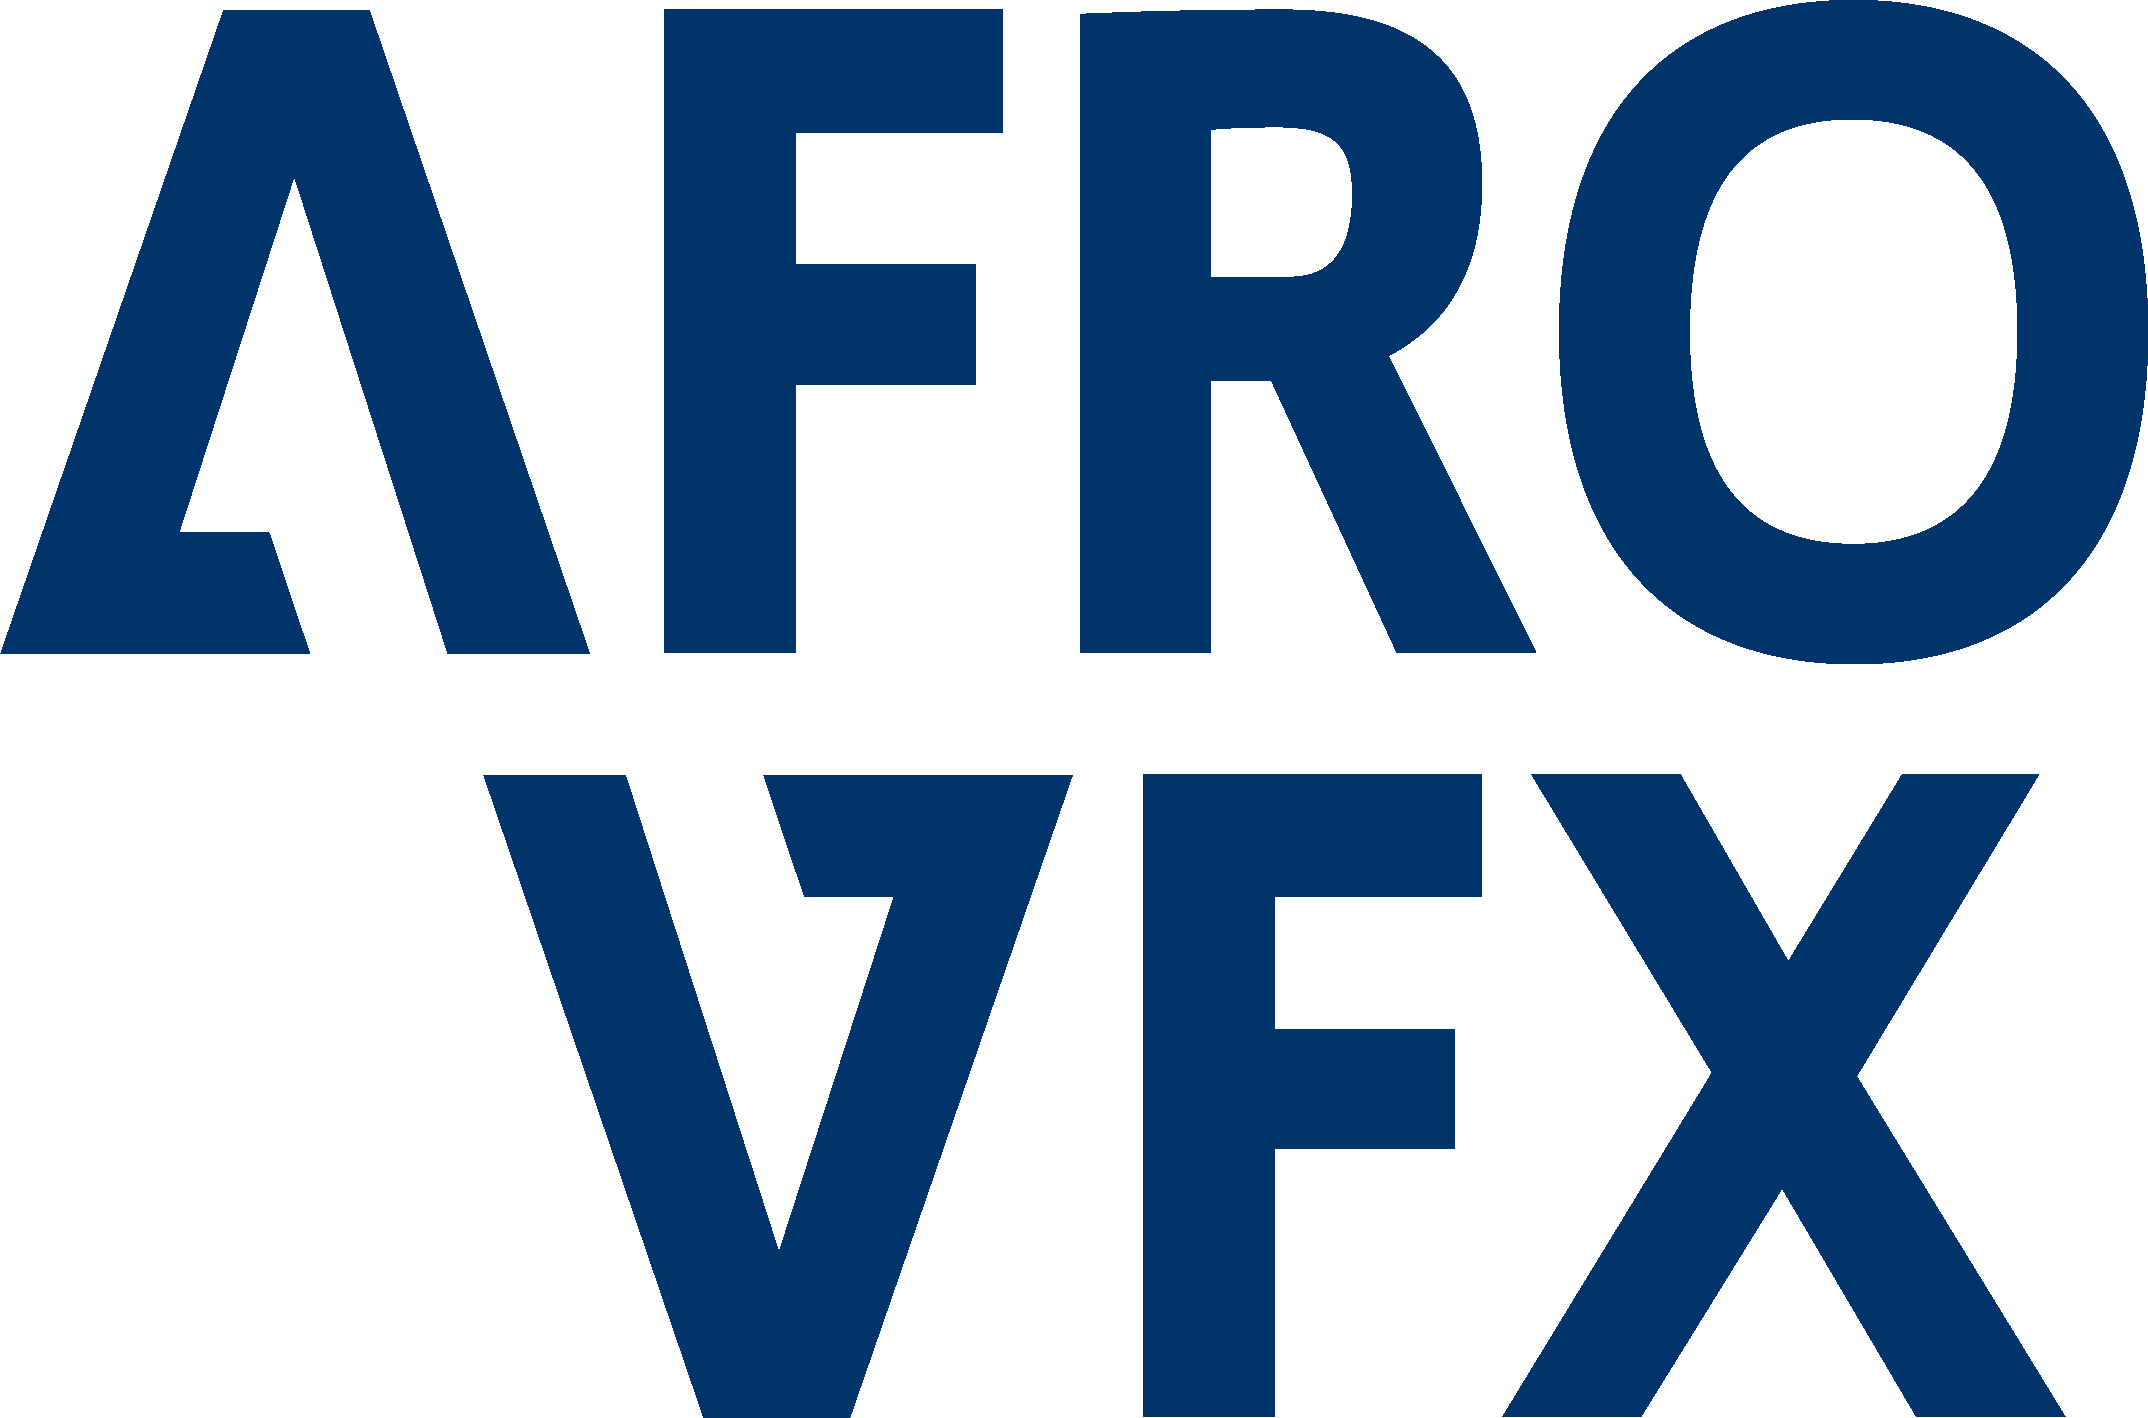 Afro Vfx